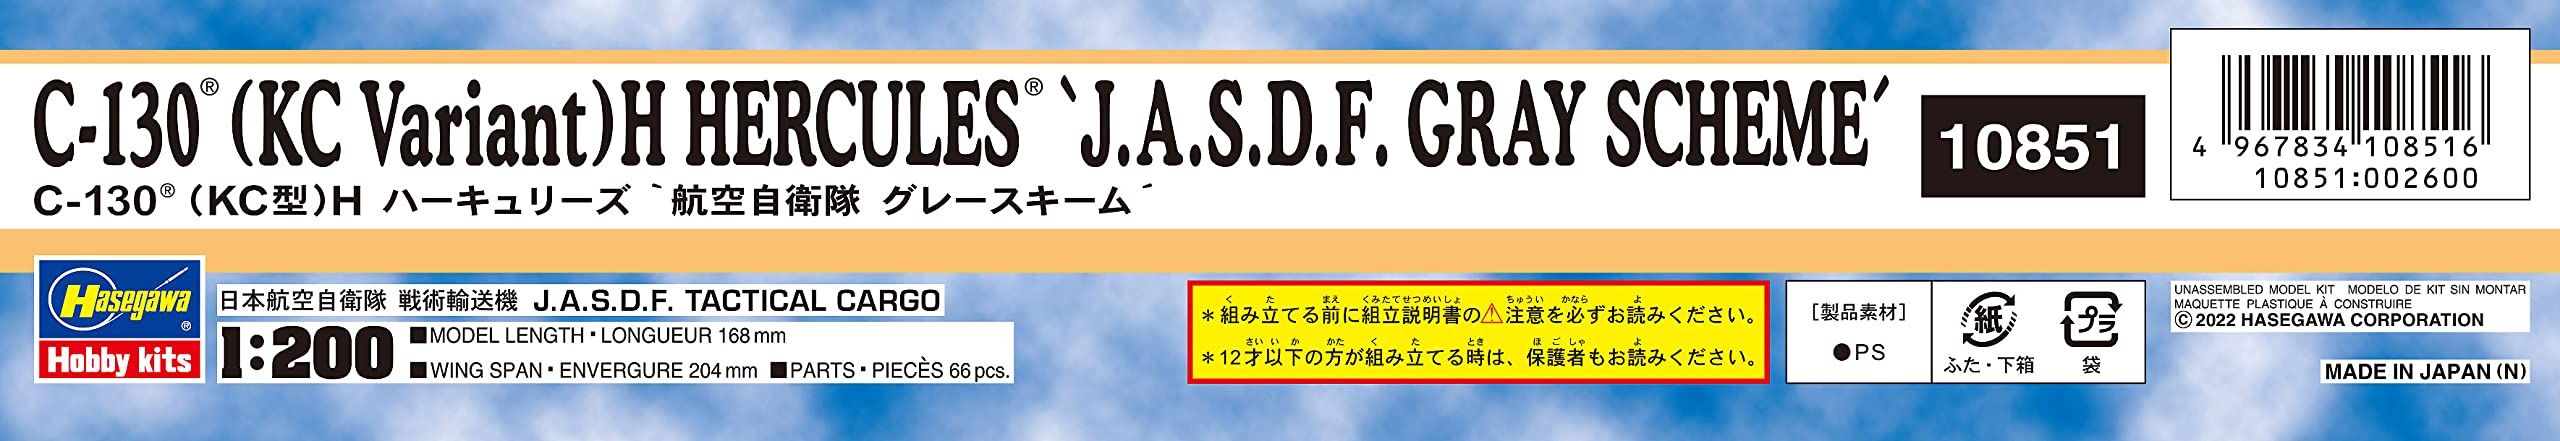 Hasegawa 1/200 C-130 KC Variant H HERCULES J.A.S.D.F. GRAY SCHEME kit 10851 NEW_3